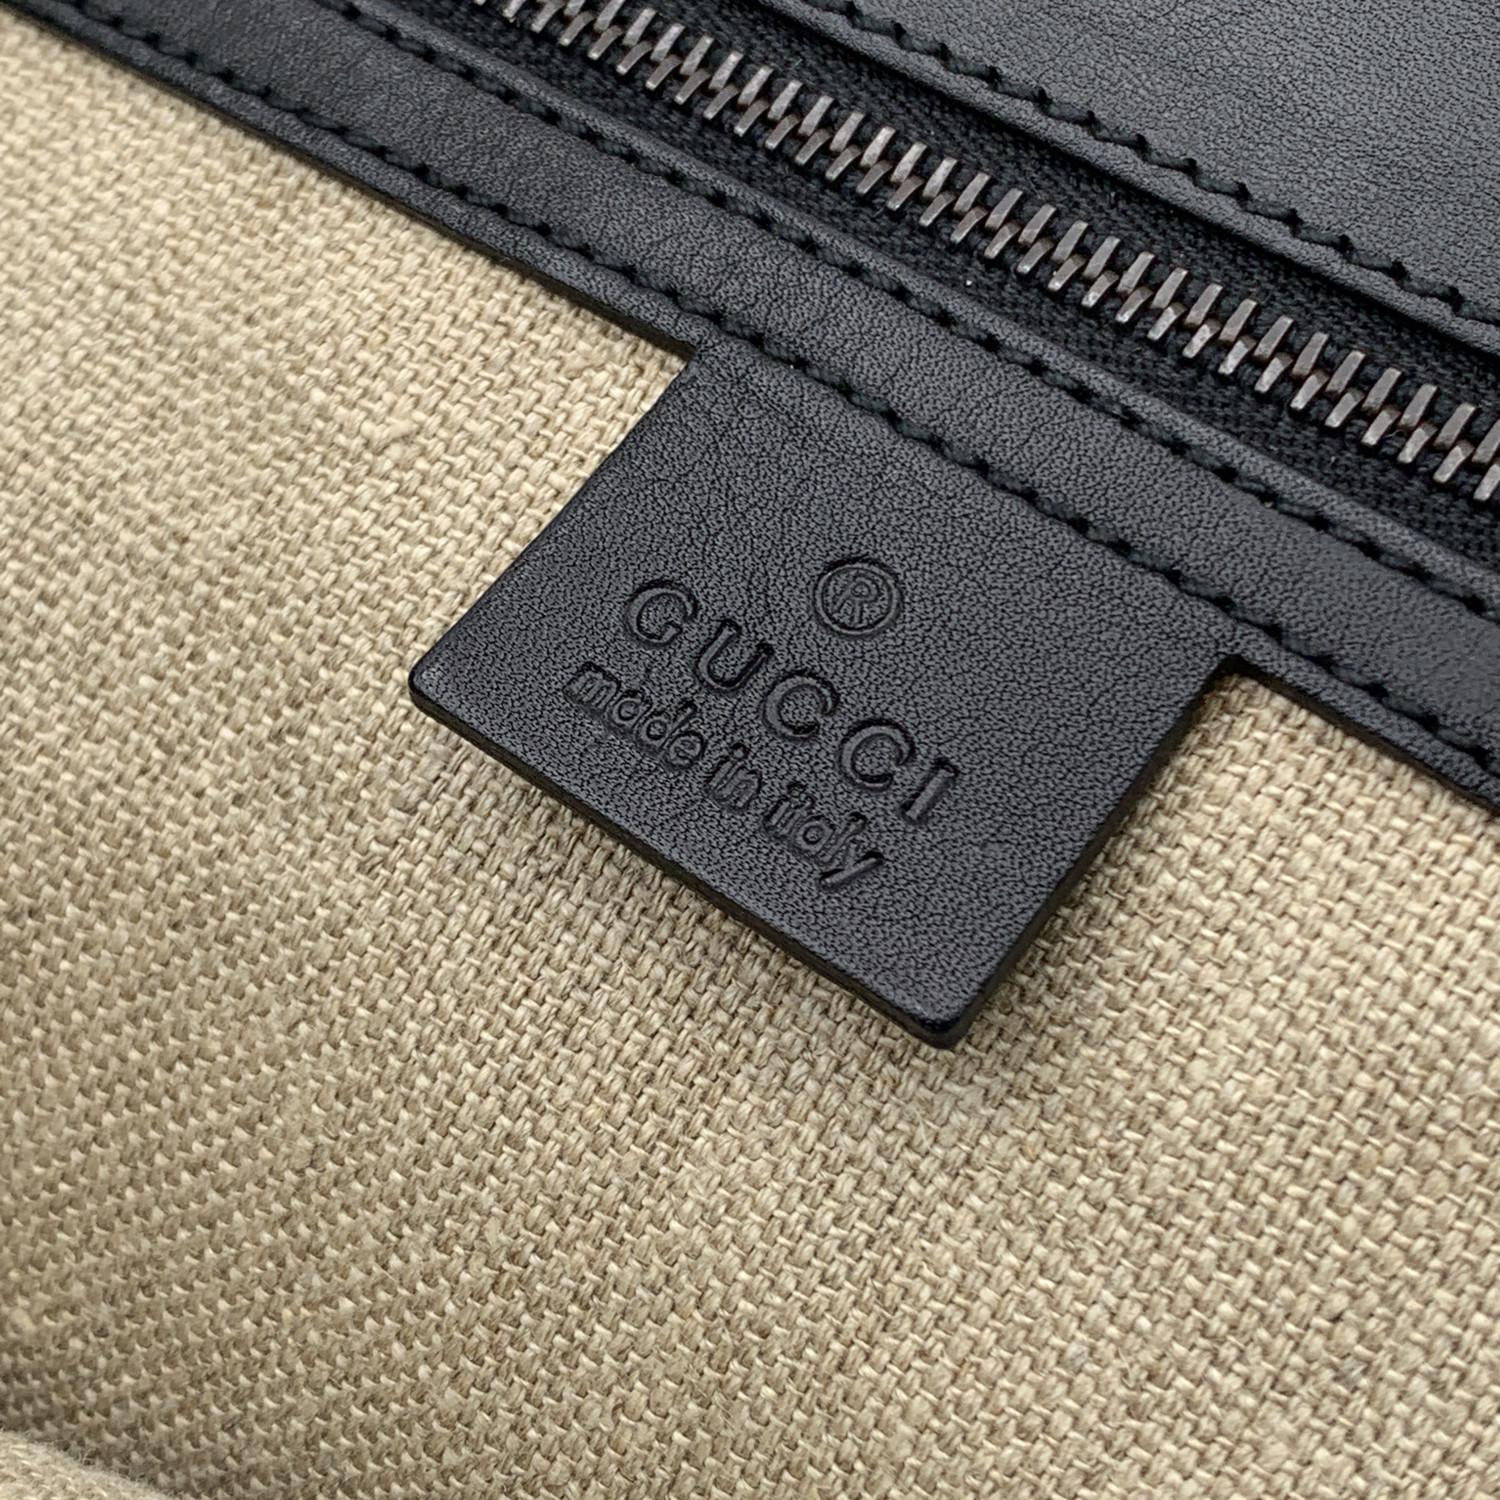 Gucci Black Leather Bamboo Detail Handbag Satchel Bag 2